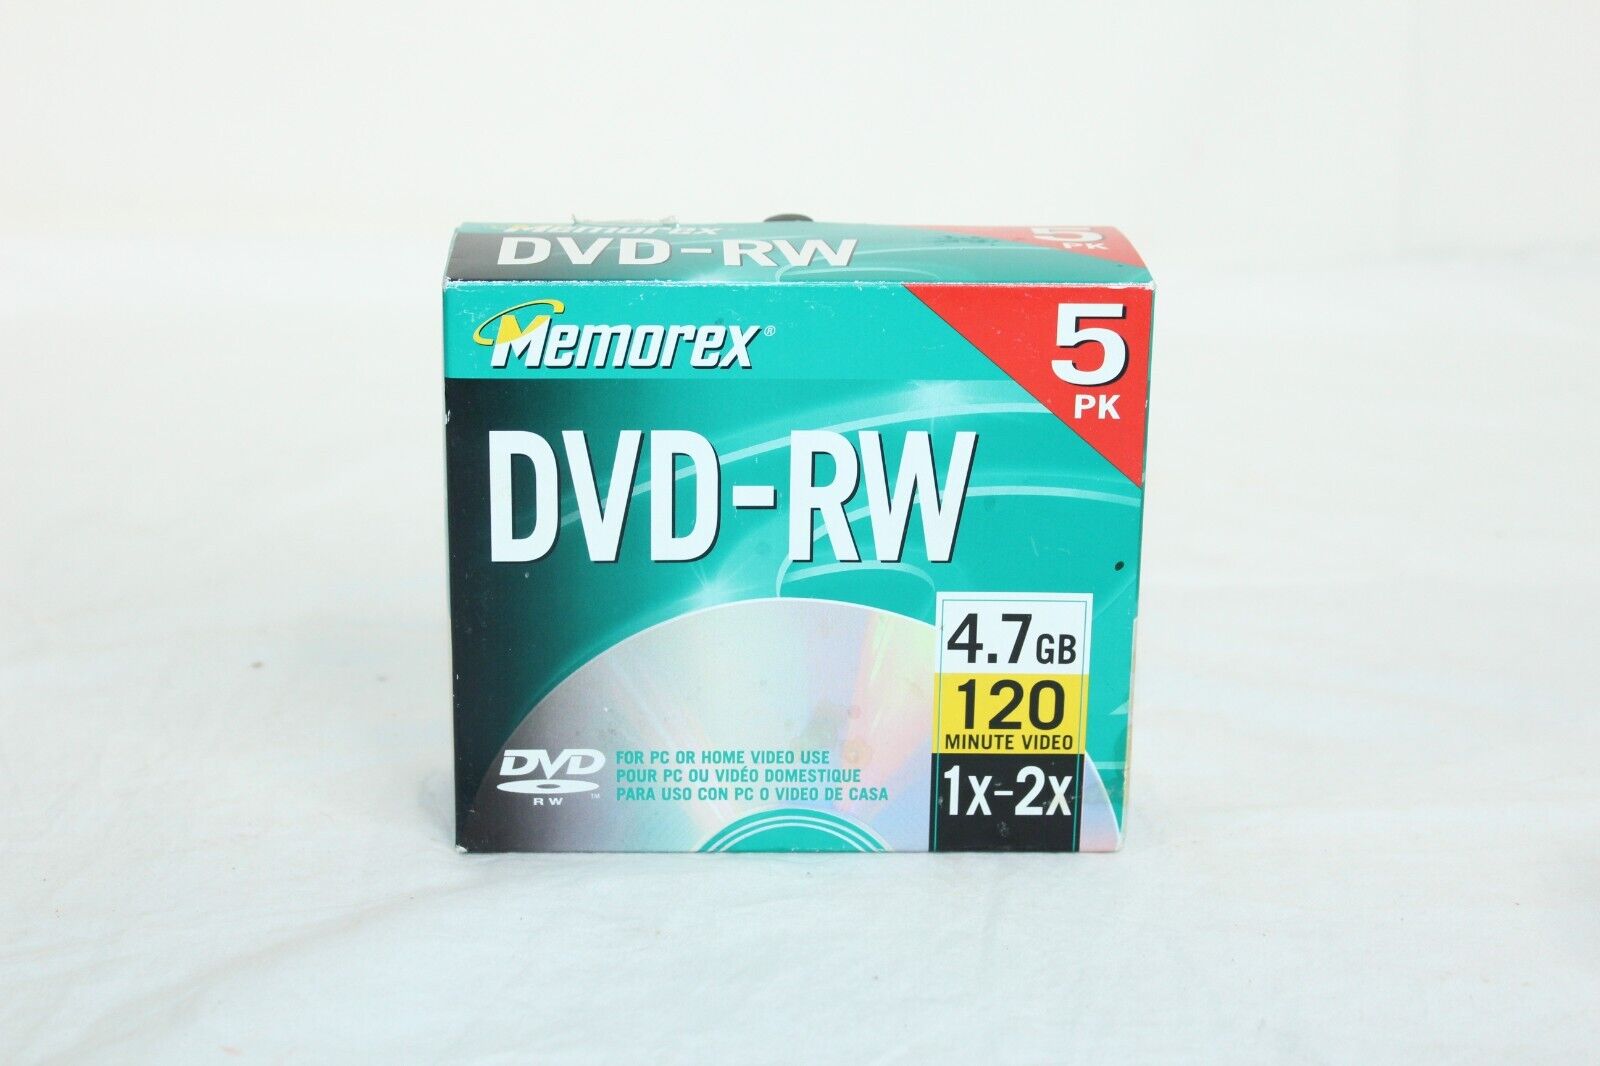 New Open Box Memorex DVD+RW 5 PK 4.7 GB 120 MIN.